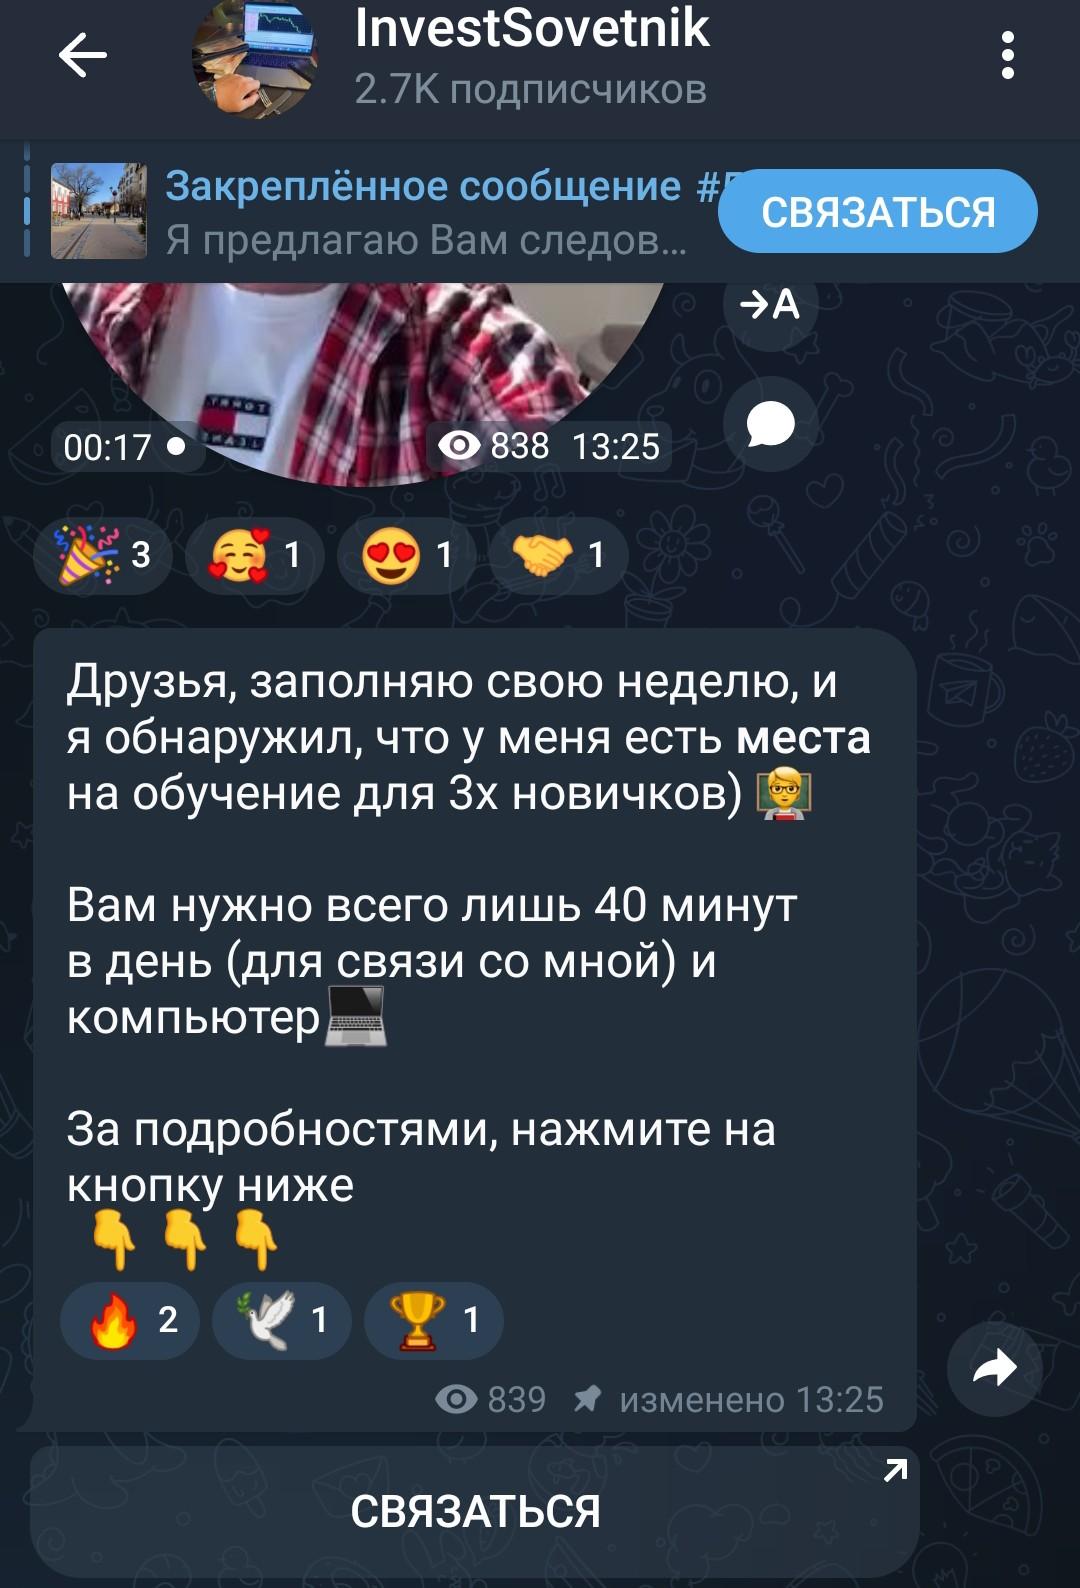 Invest Sovetnik - телеграм